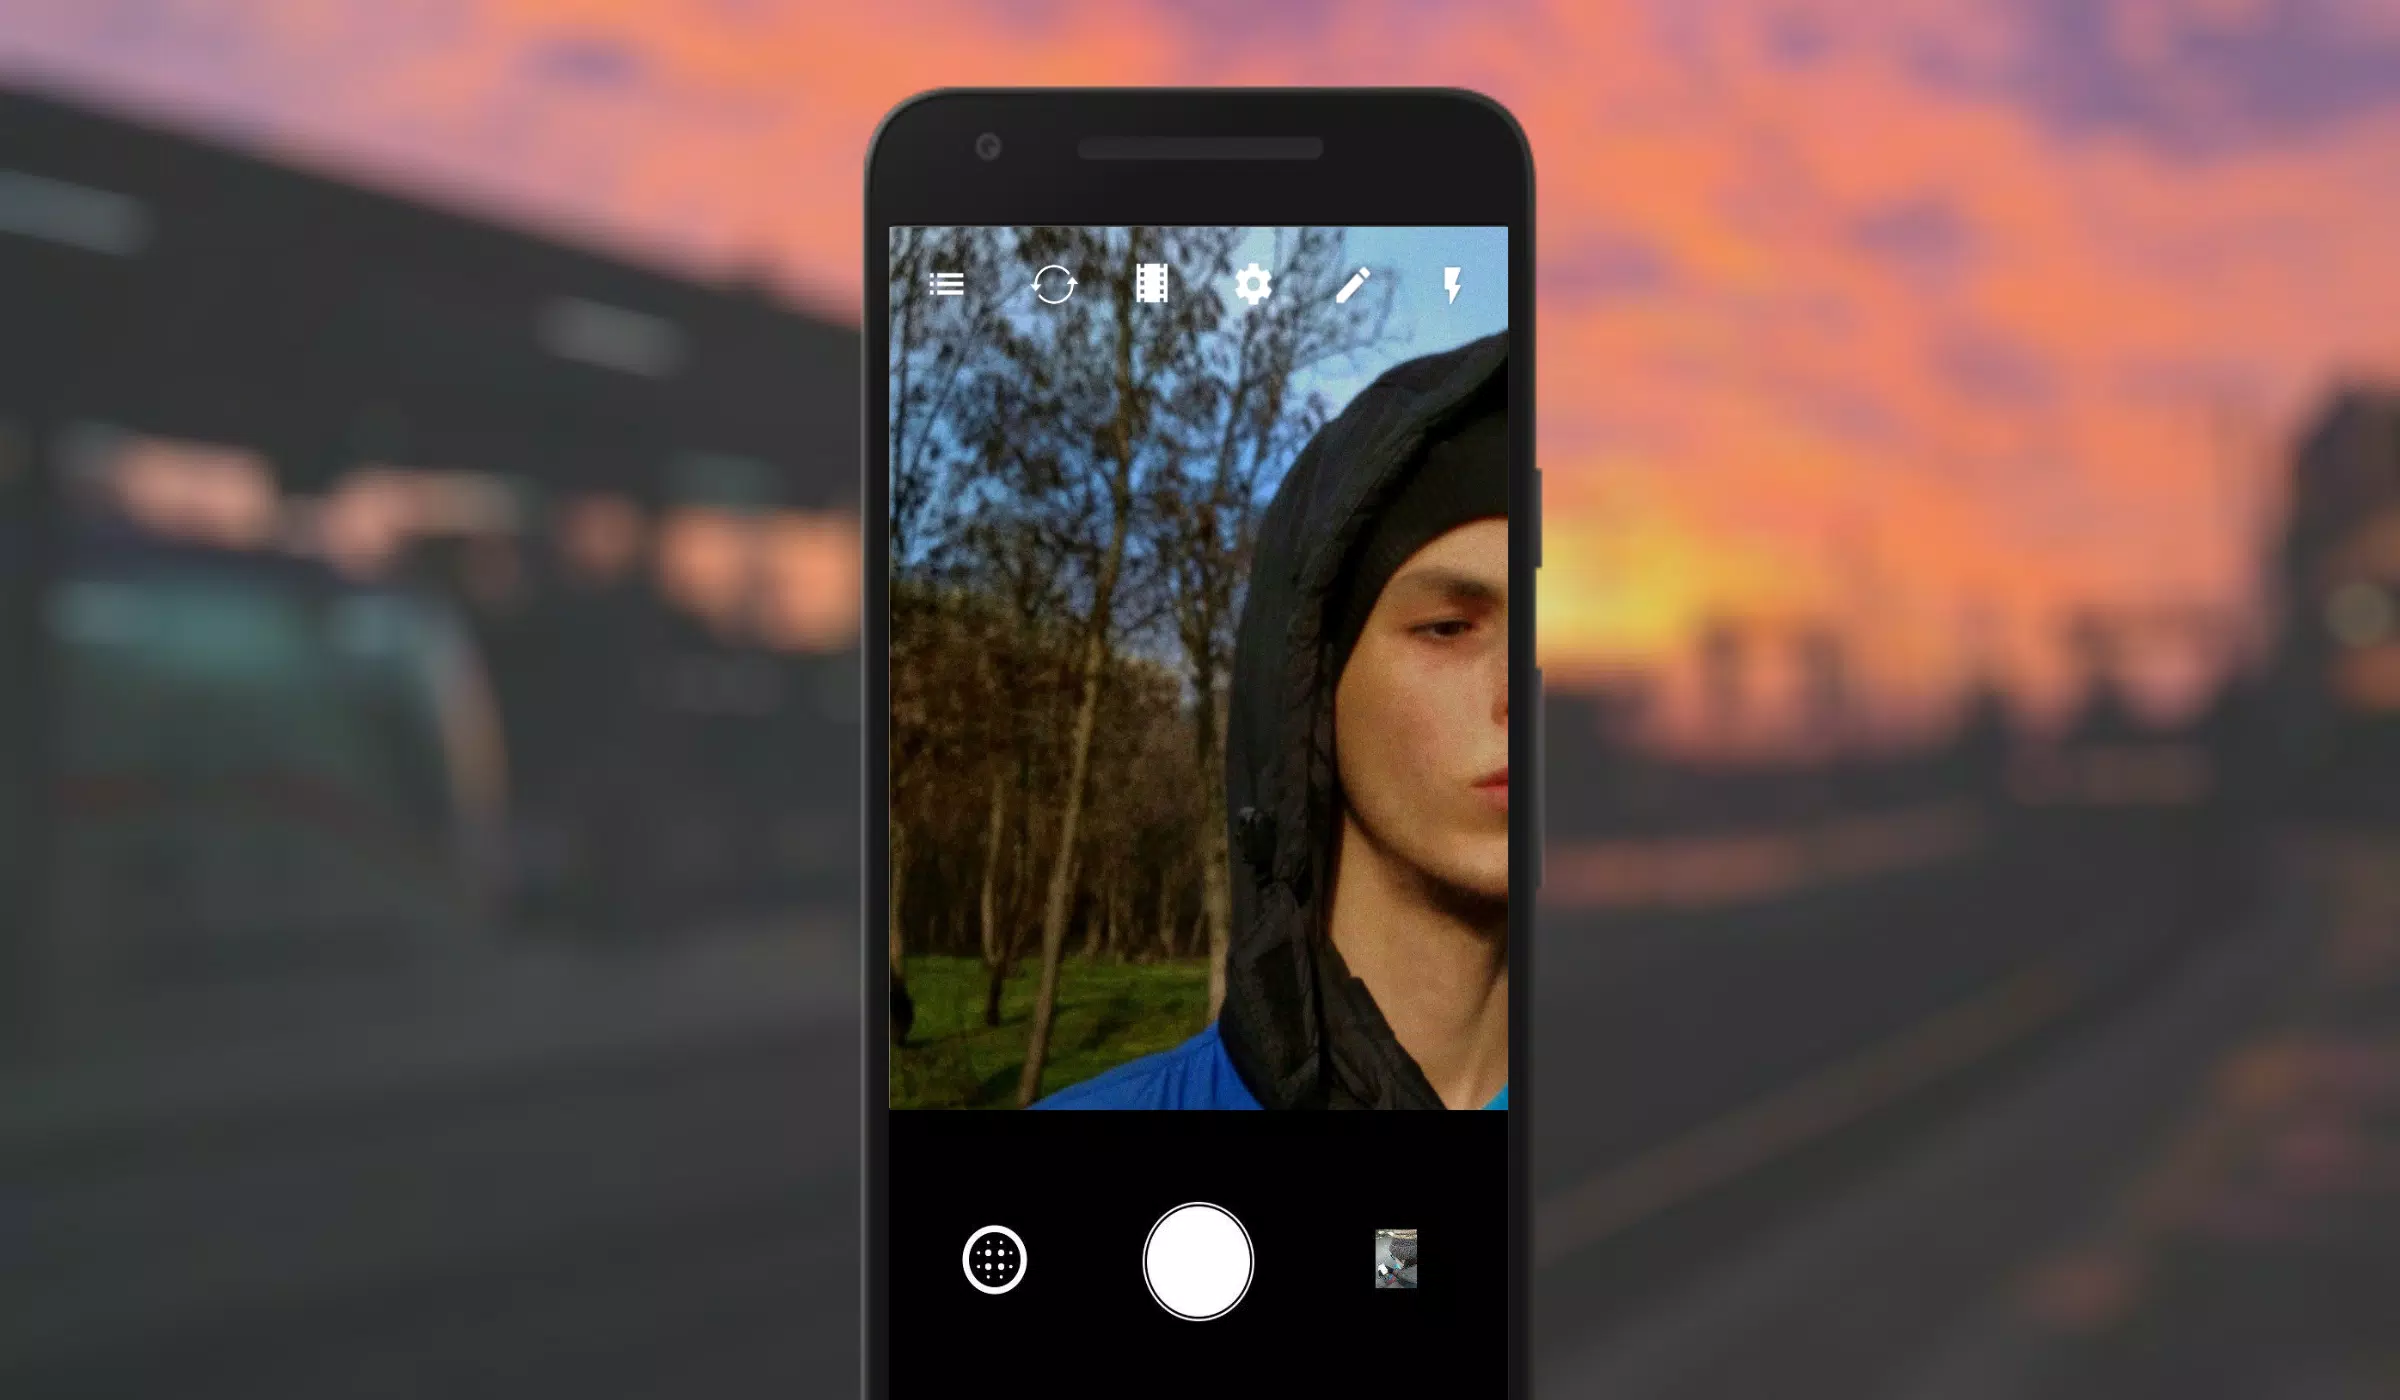 Camera lens blur (portrait mode or boke) LITE APK for Android Download